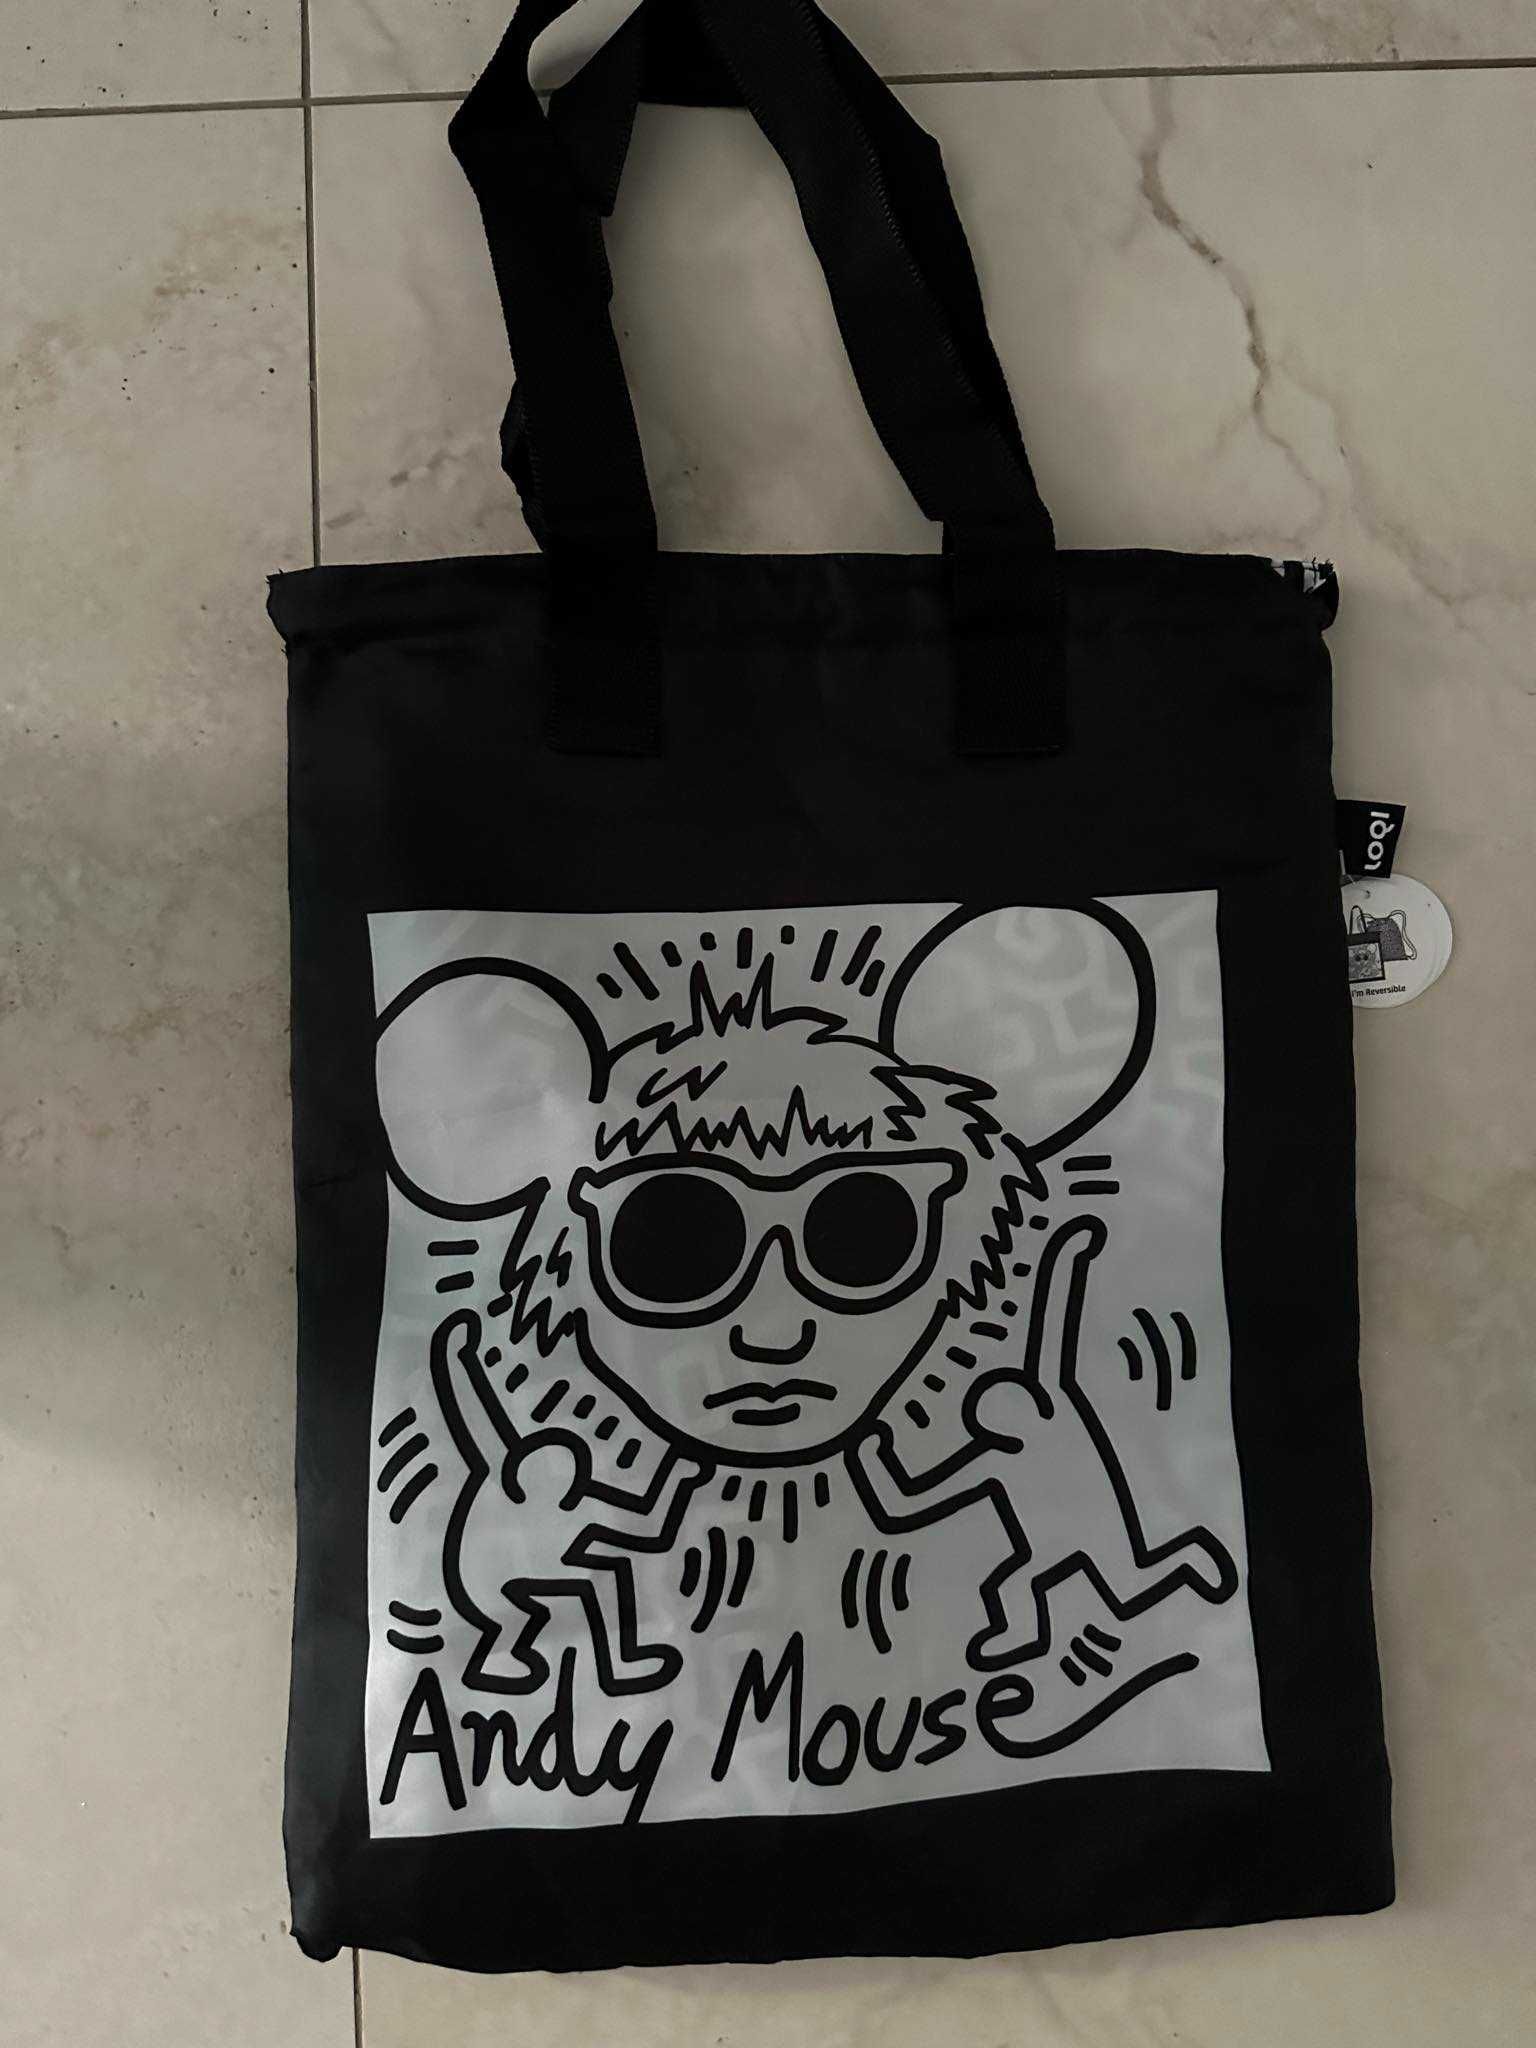 Torba/plecak nowa dwustronna (Keith Haring Andy Mouse)